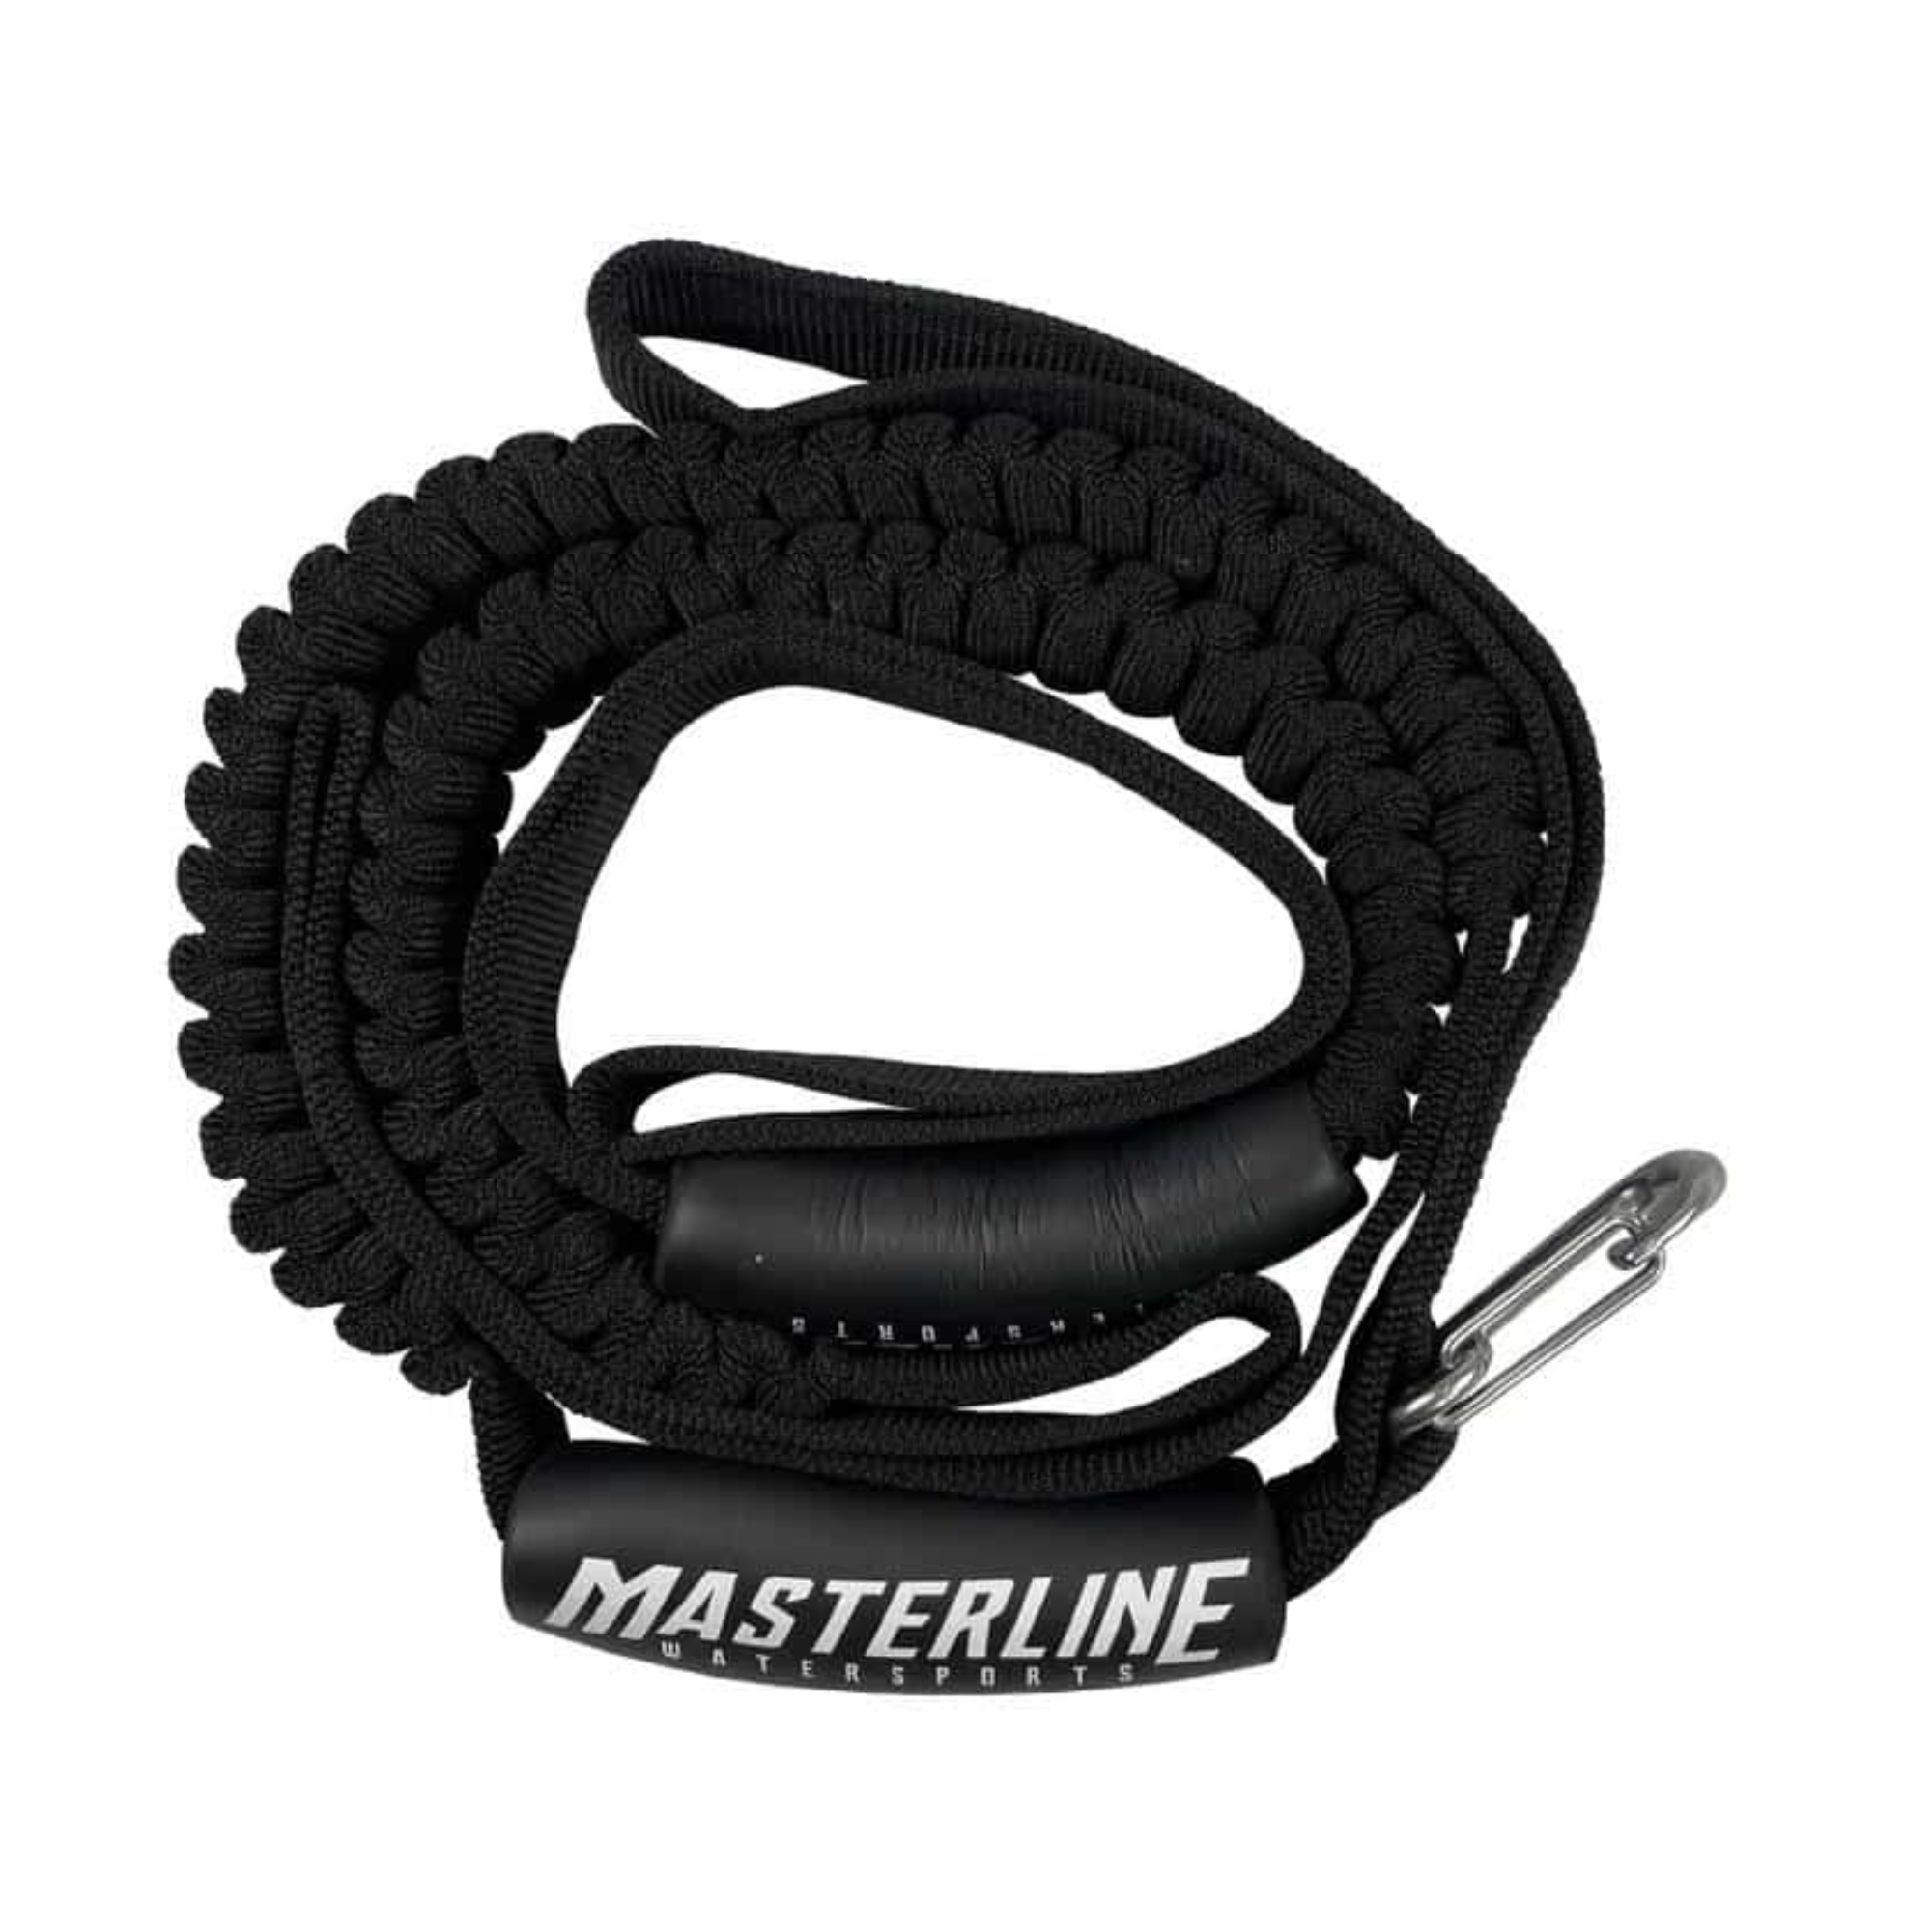 Masterline 6ft Webbing Dock Tie